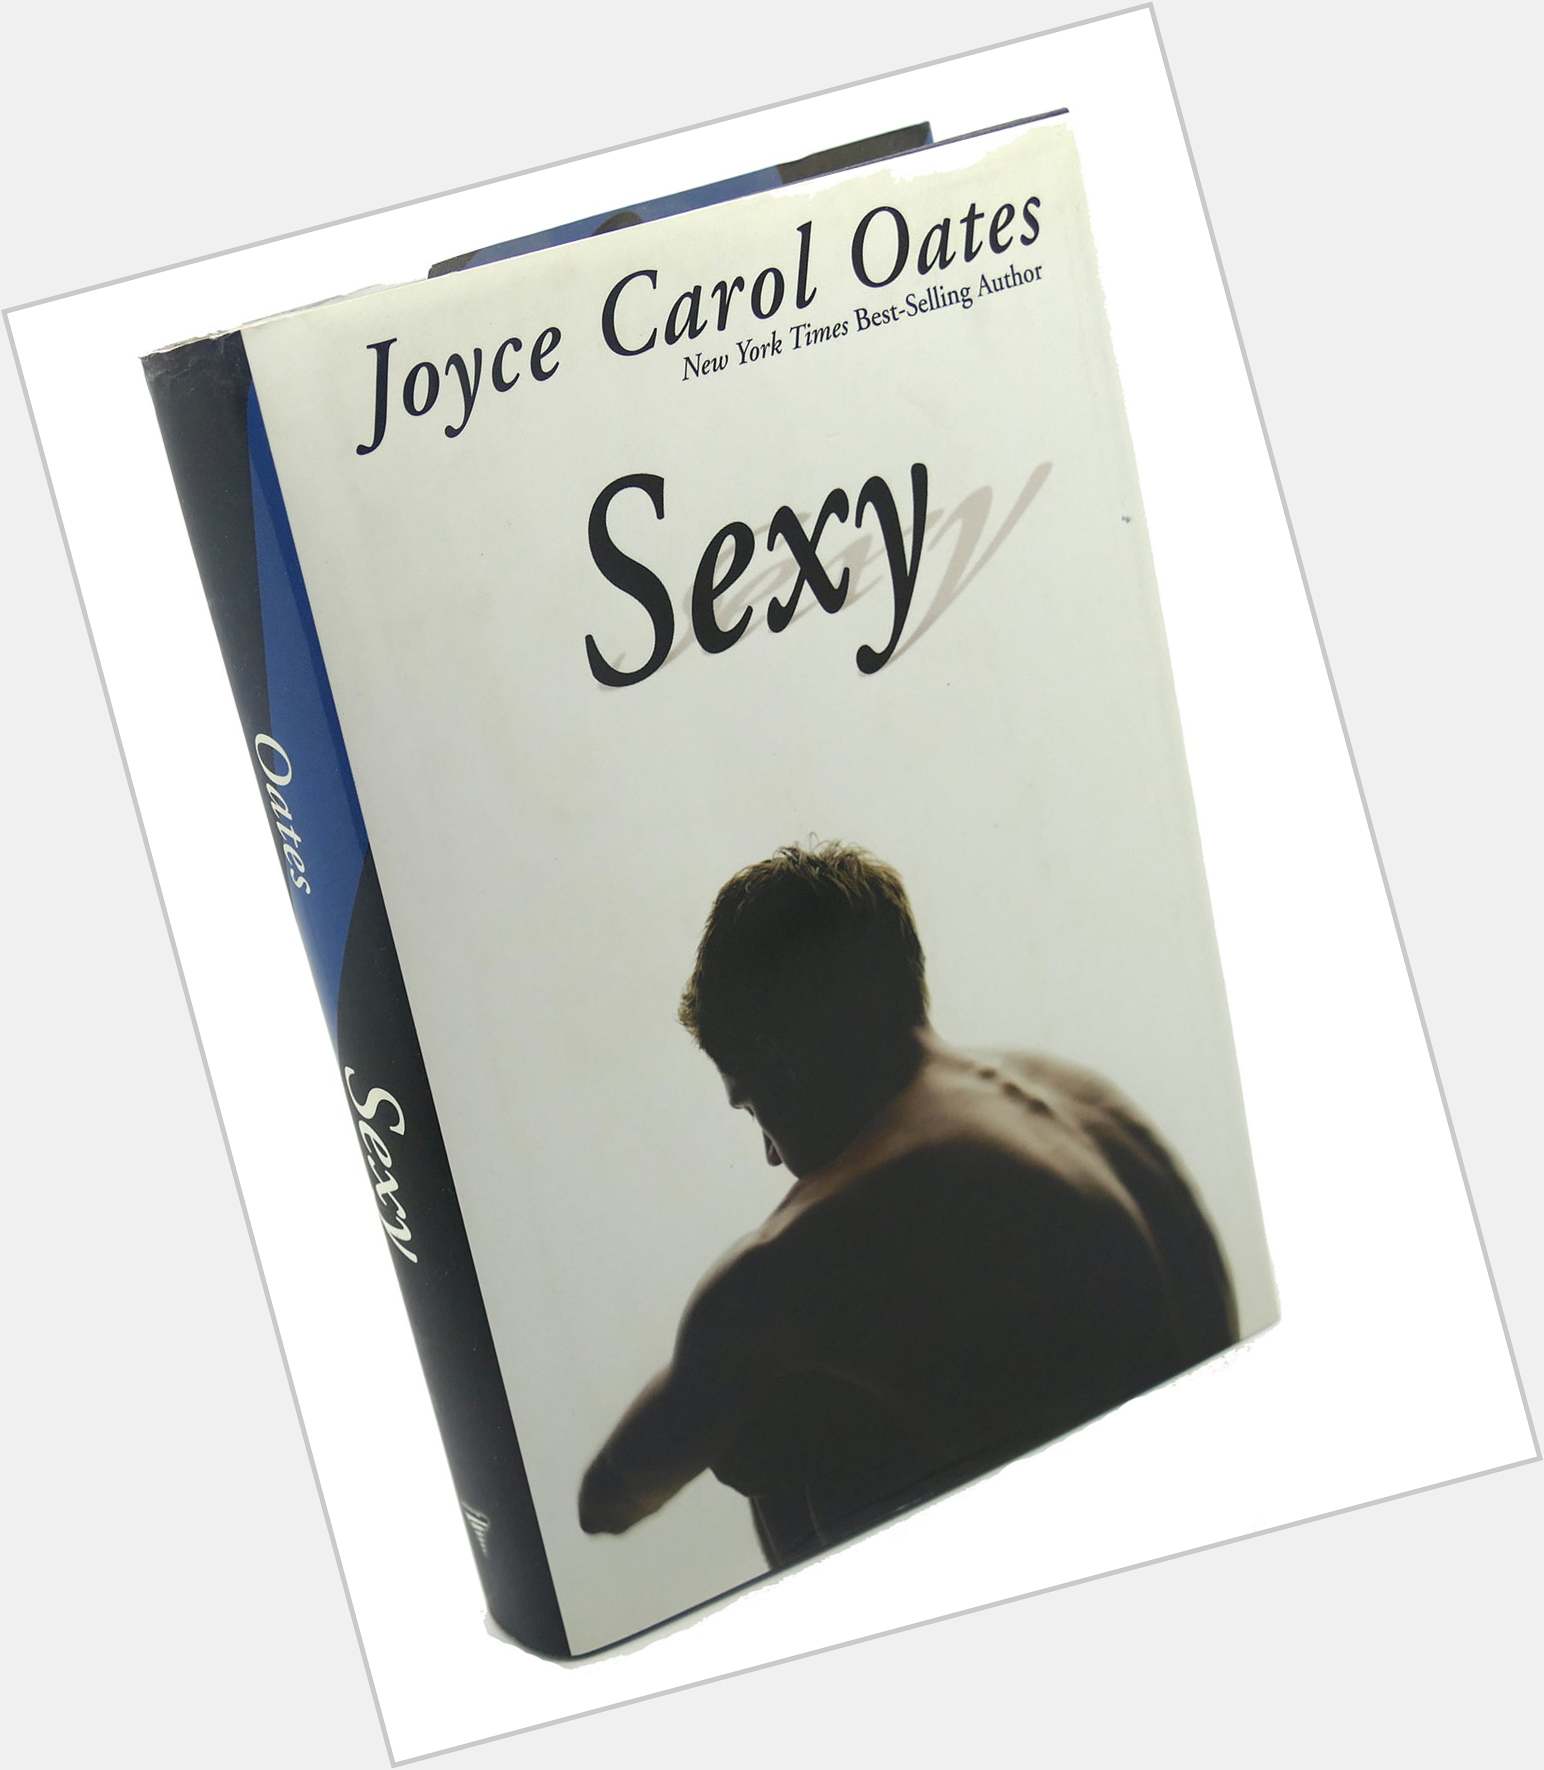 <a href="/hot-women/joyce-carol-oates/where-dating-news-photos">Joyce Carol Oates</a>  